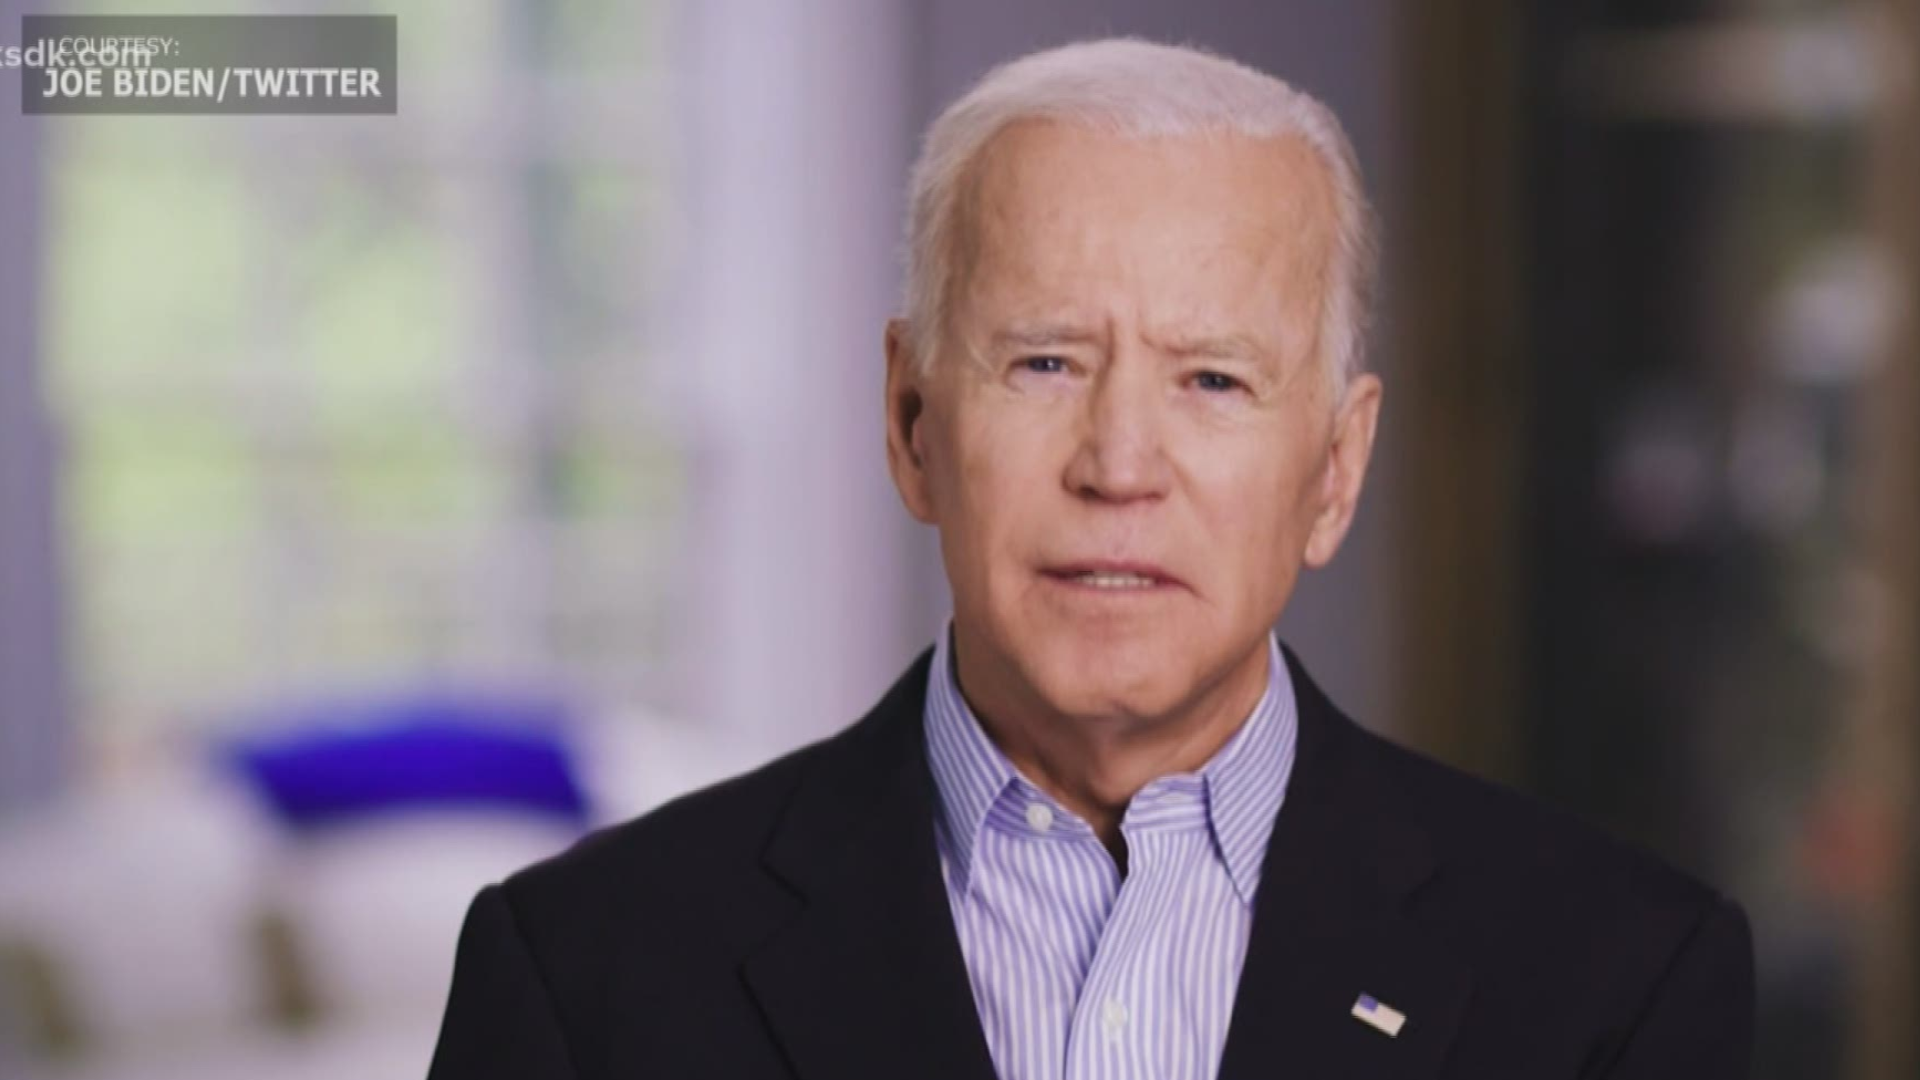 Joe Biden announces presidential bid